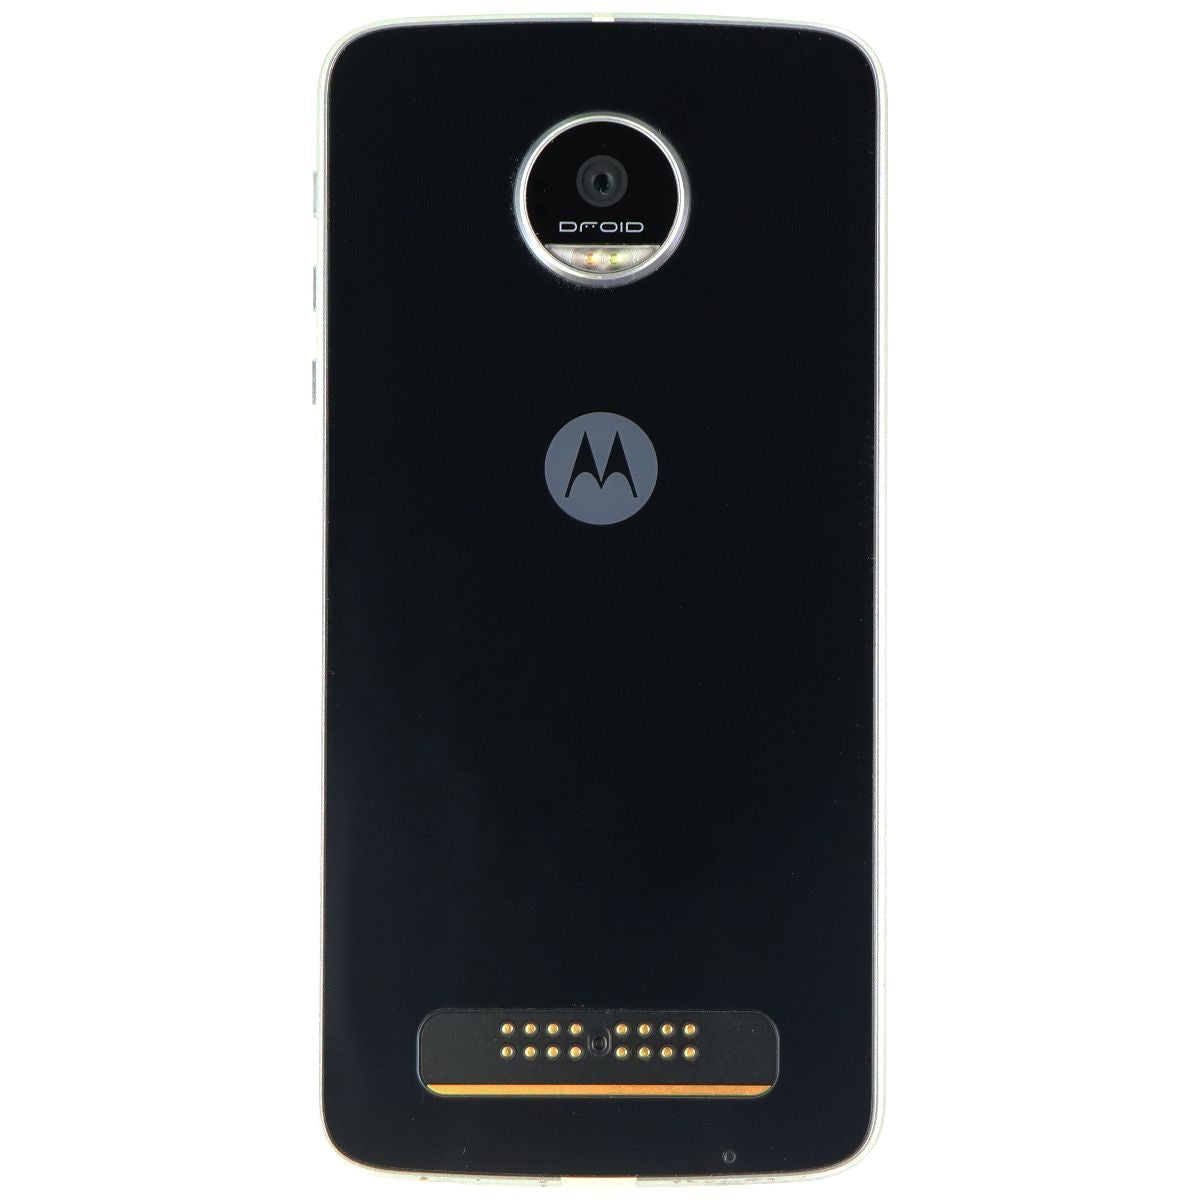 Motorola Moto Z Play (5.5-in) Smartphone (XT1635-01) Verizon Only - 32GB / Black Cell Phones & Smartphones Motorola    - Simple Cell Bulk Wholesale Pricing - USA Seller